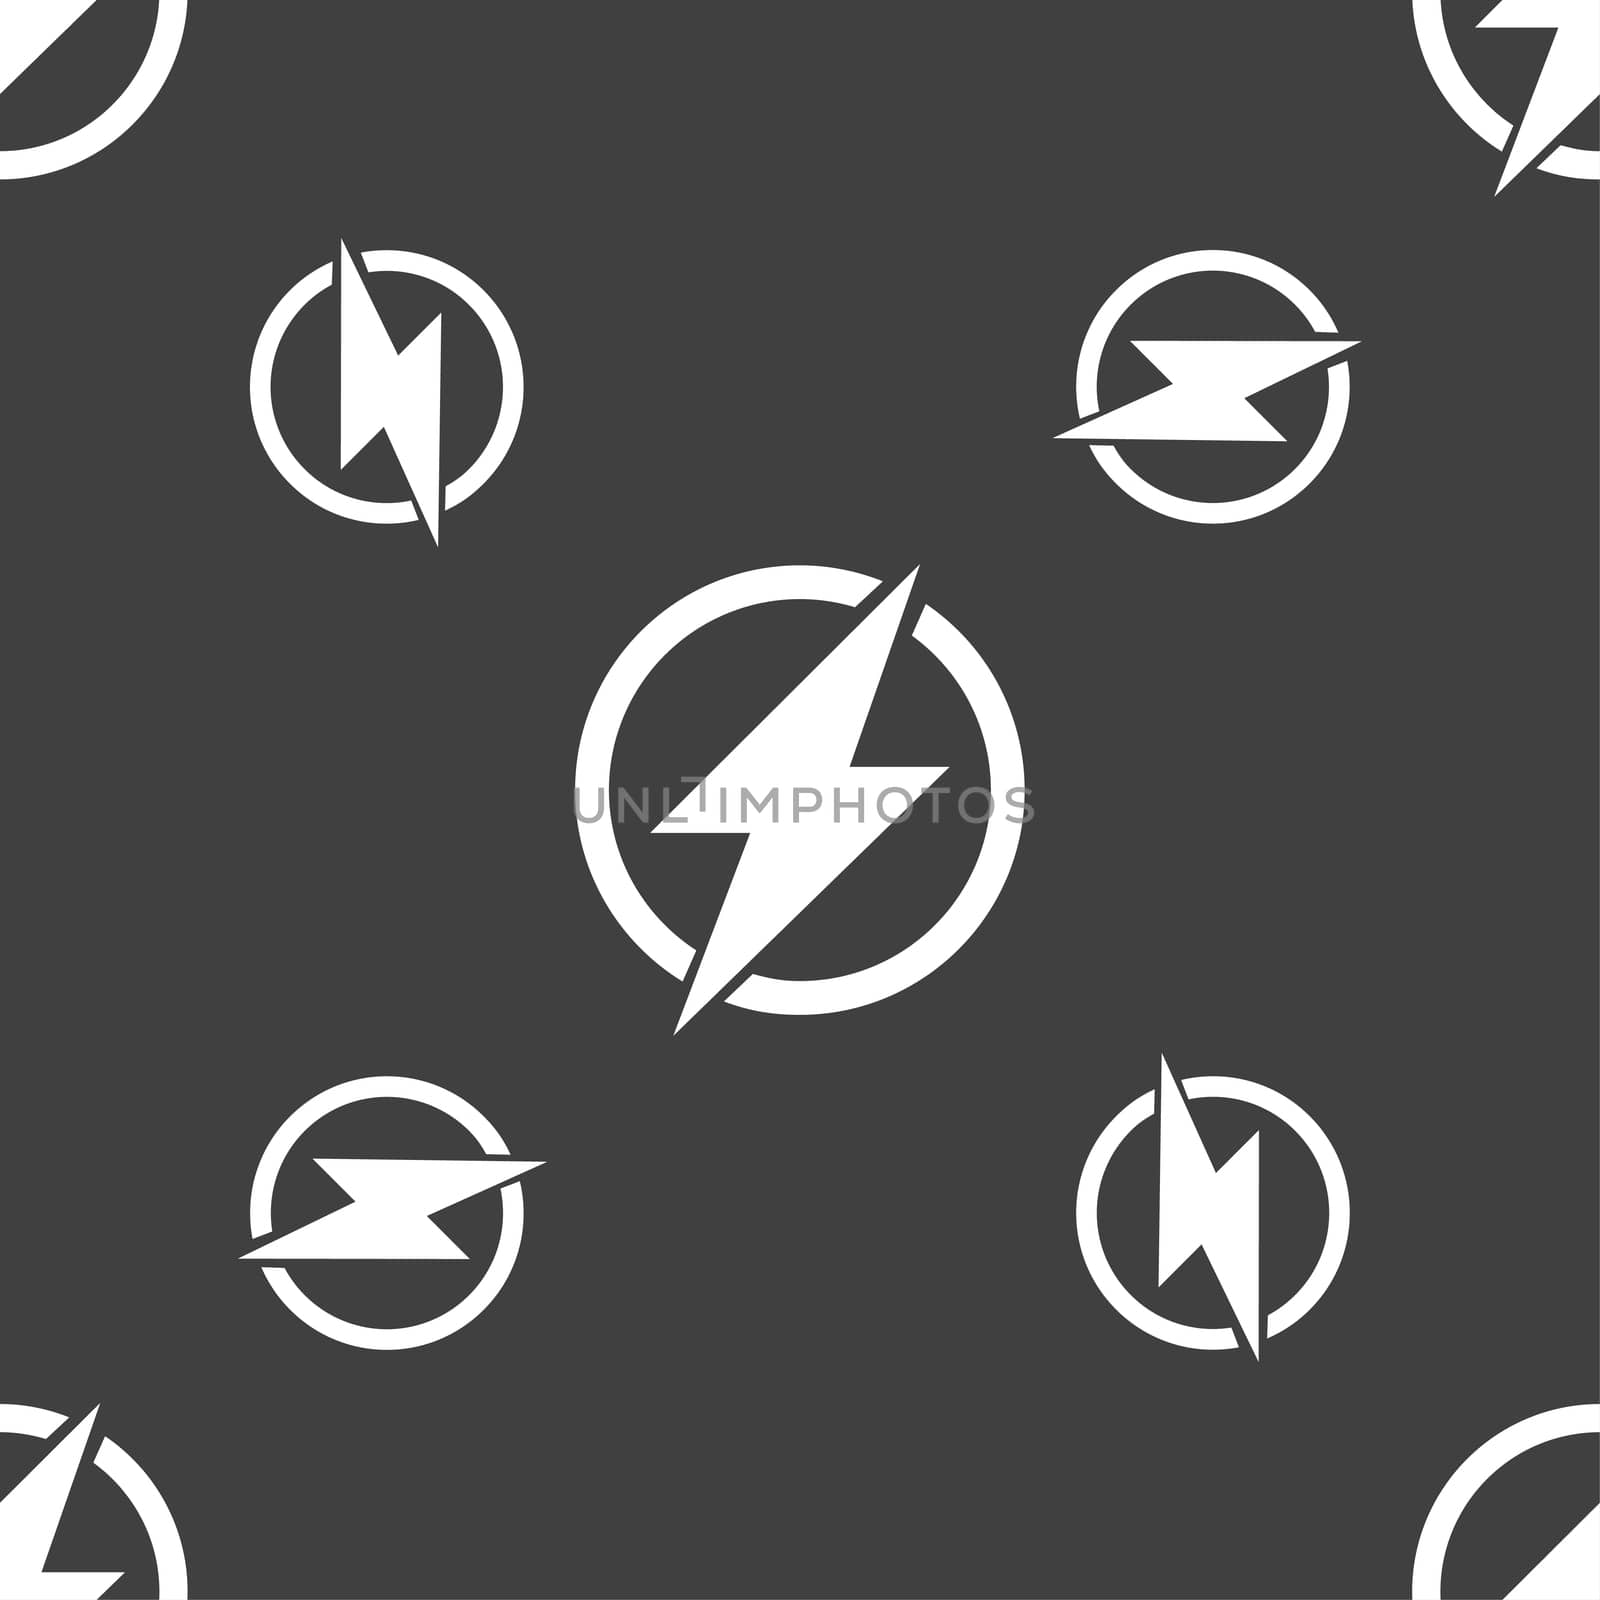 Photo flash sign icon. Lightning symbol. Seamless pattern on a gray background. illustration